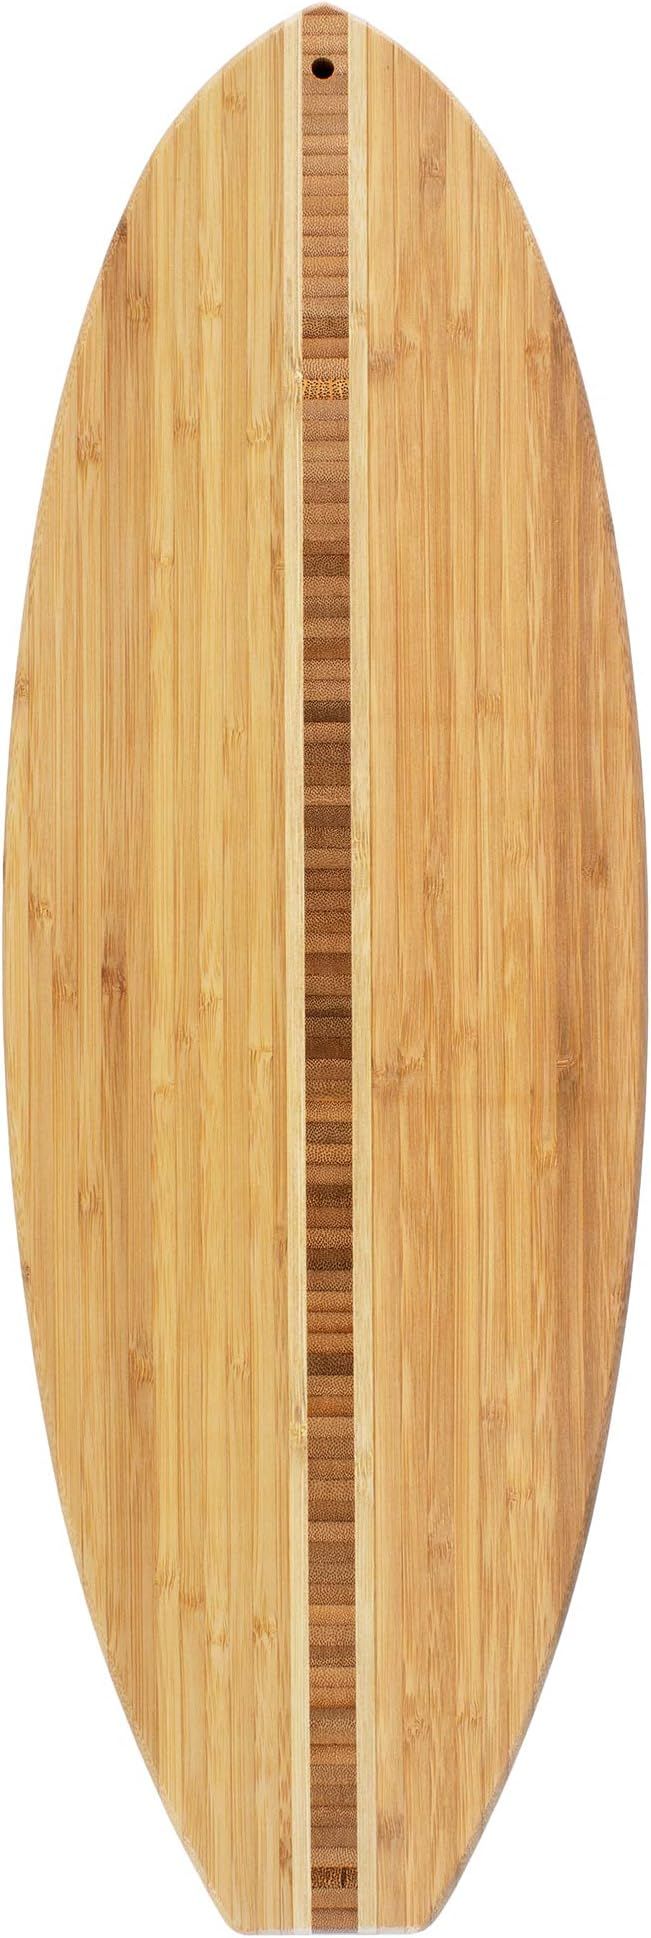 Totally Bamboo surfboard cutting board, 23x7.5 Inches | Amazon (US)